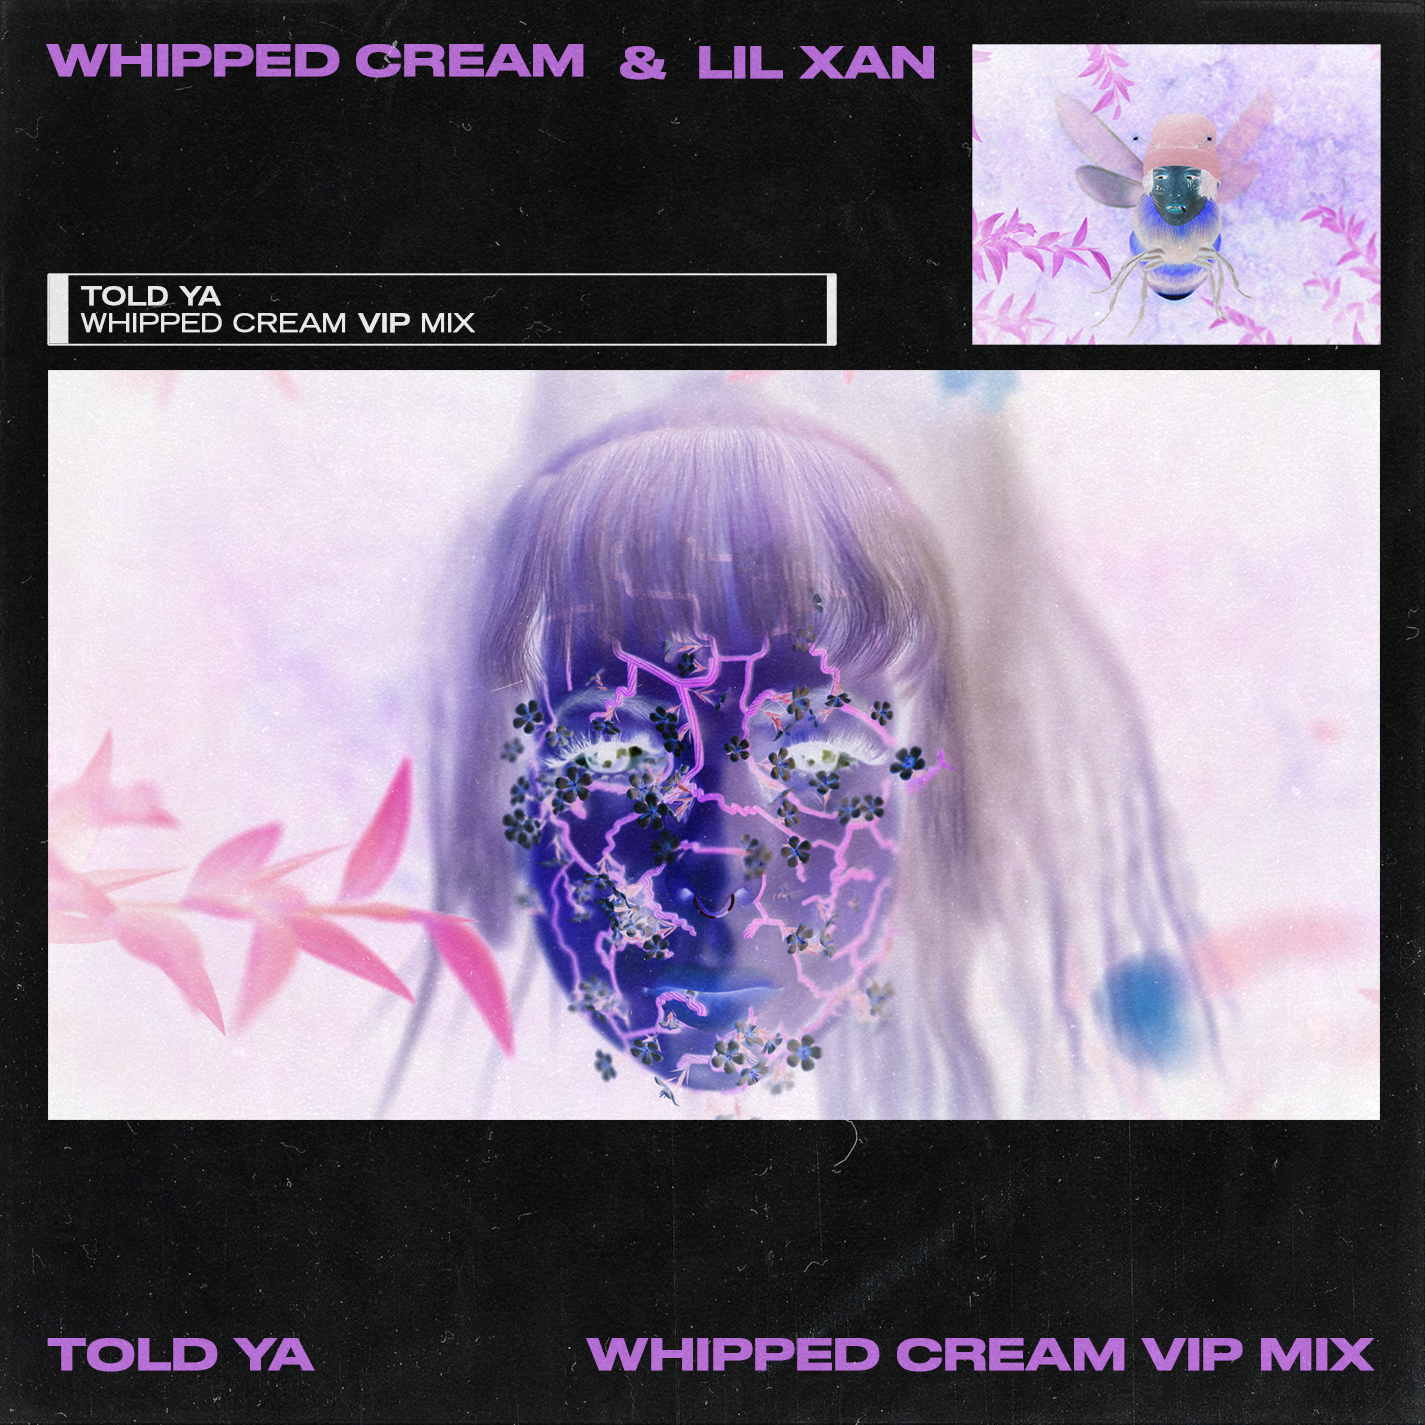 WHIPPED CREAM Gets Dark on Drum & Bass VIP Remix of Her Hit Track “Told Ya”